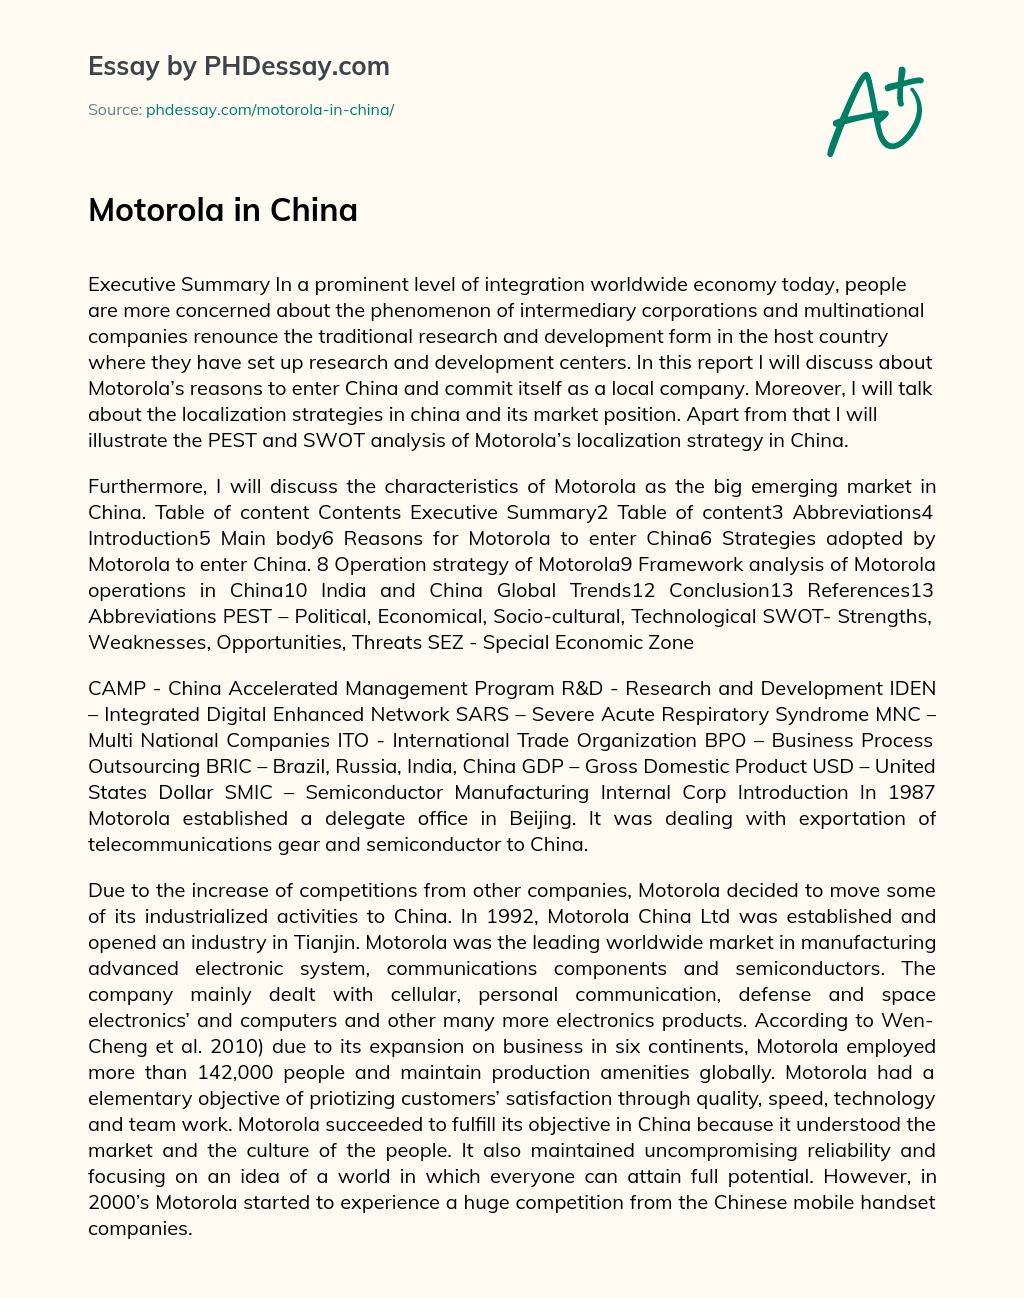 Motorola in China essay